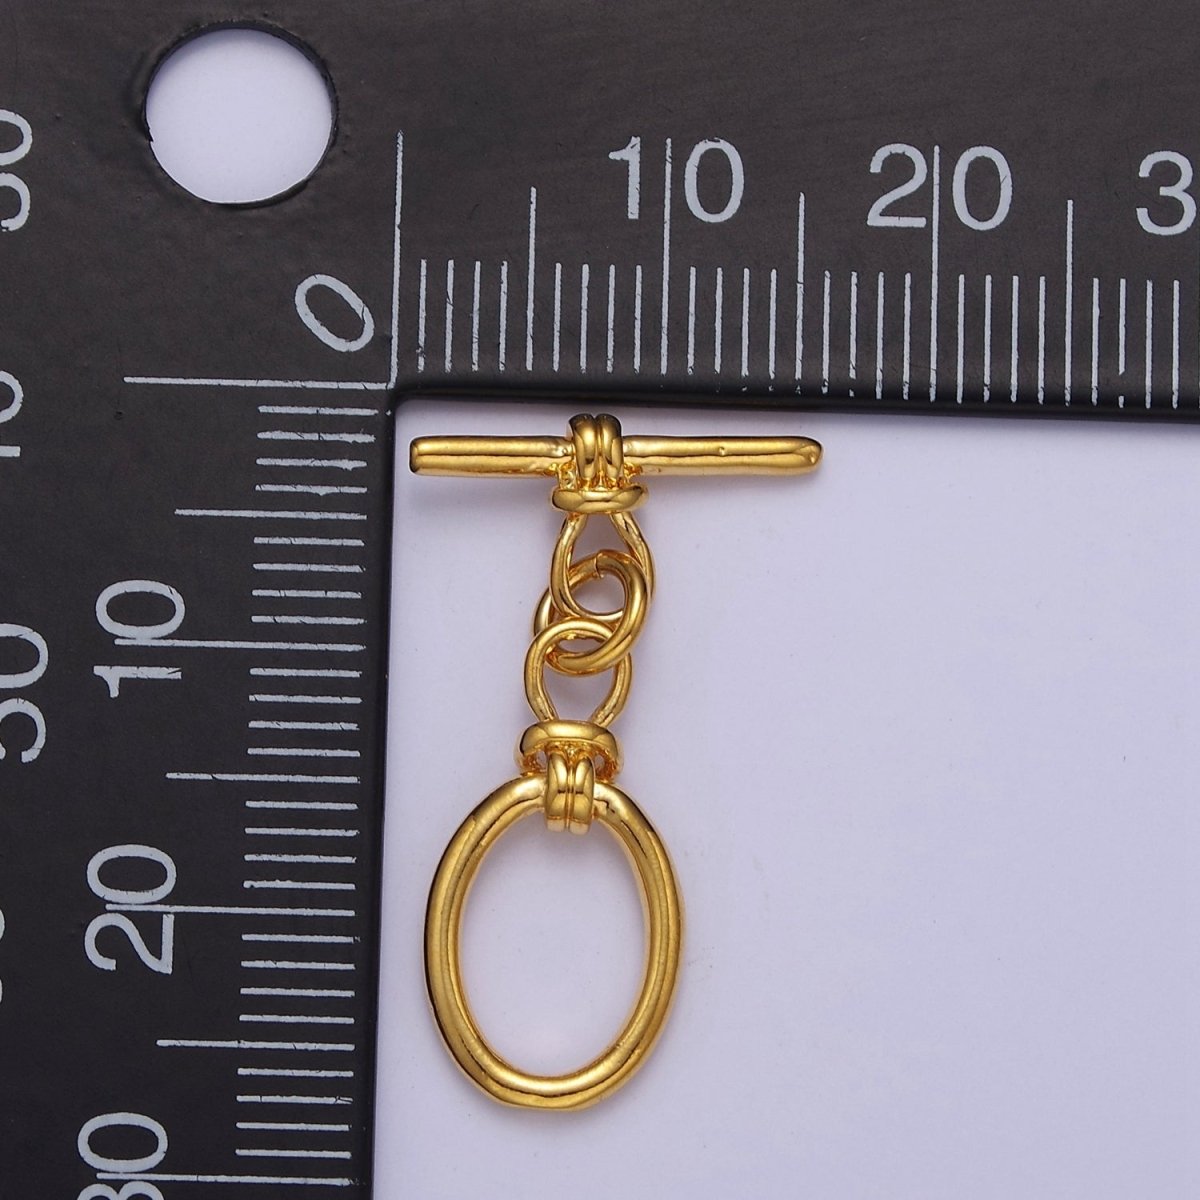 24k Gold Filled Oval Toggle Clasp, Jewelry Clasp OT Clasp Findings L-699 L-700 L-701 - DLUXCA